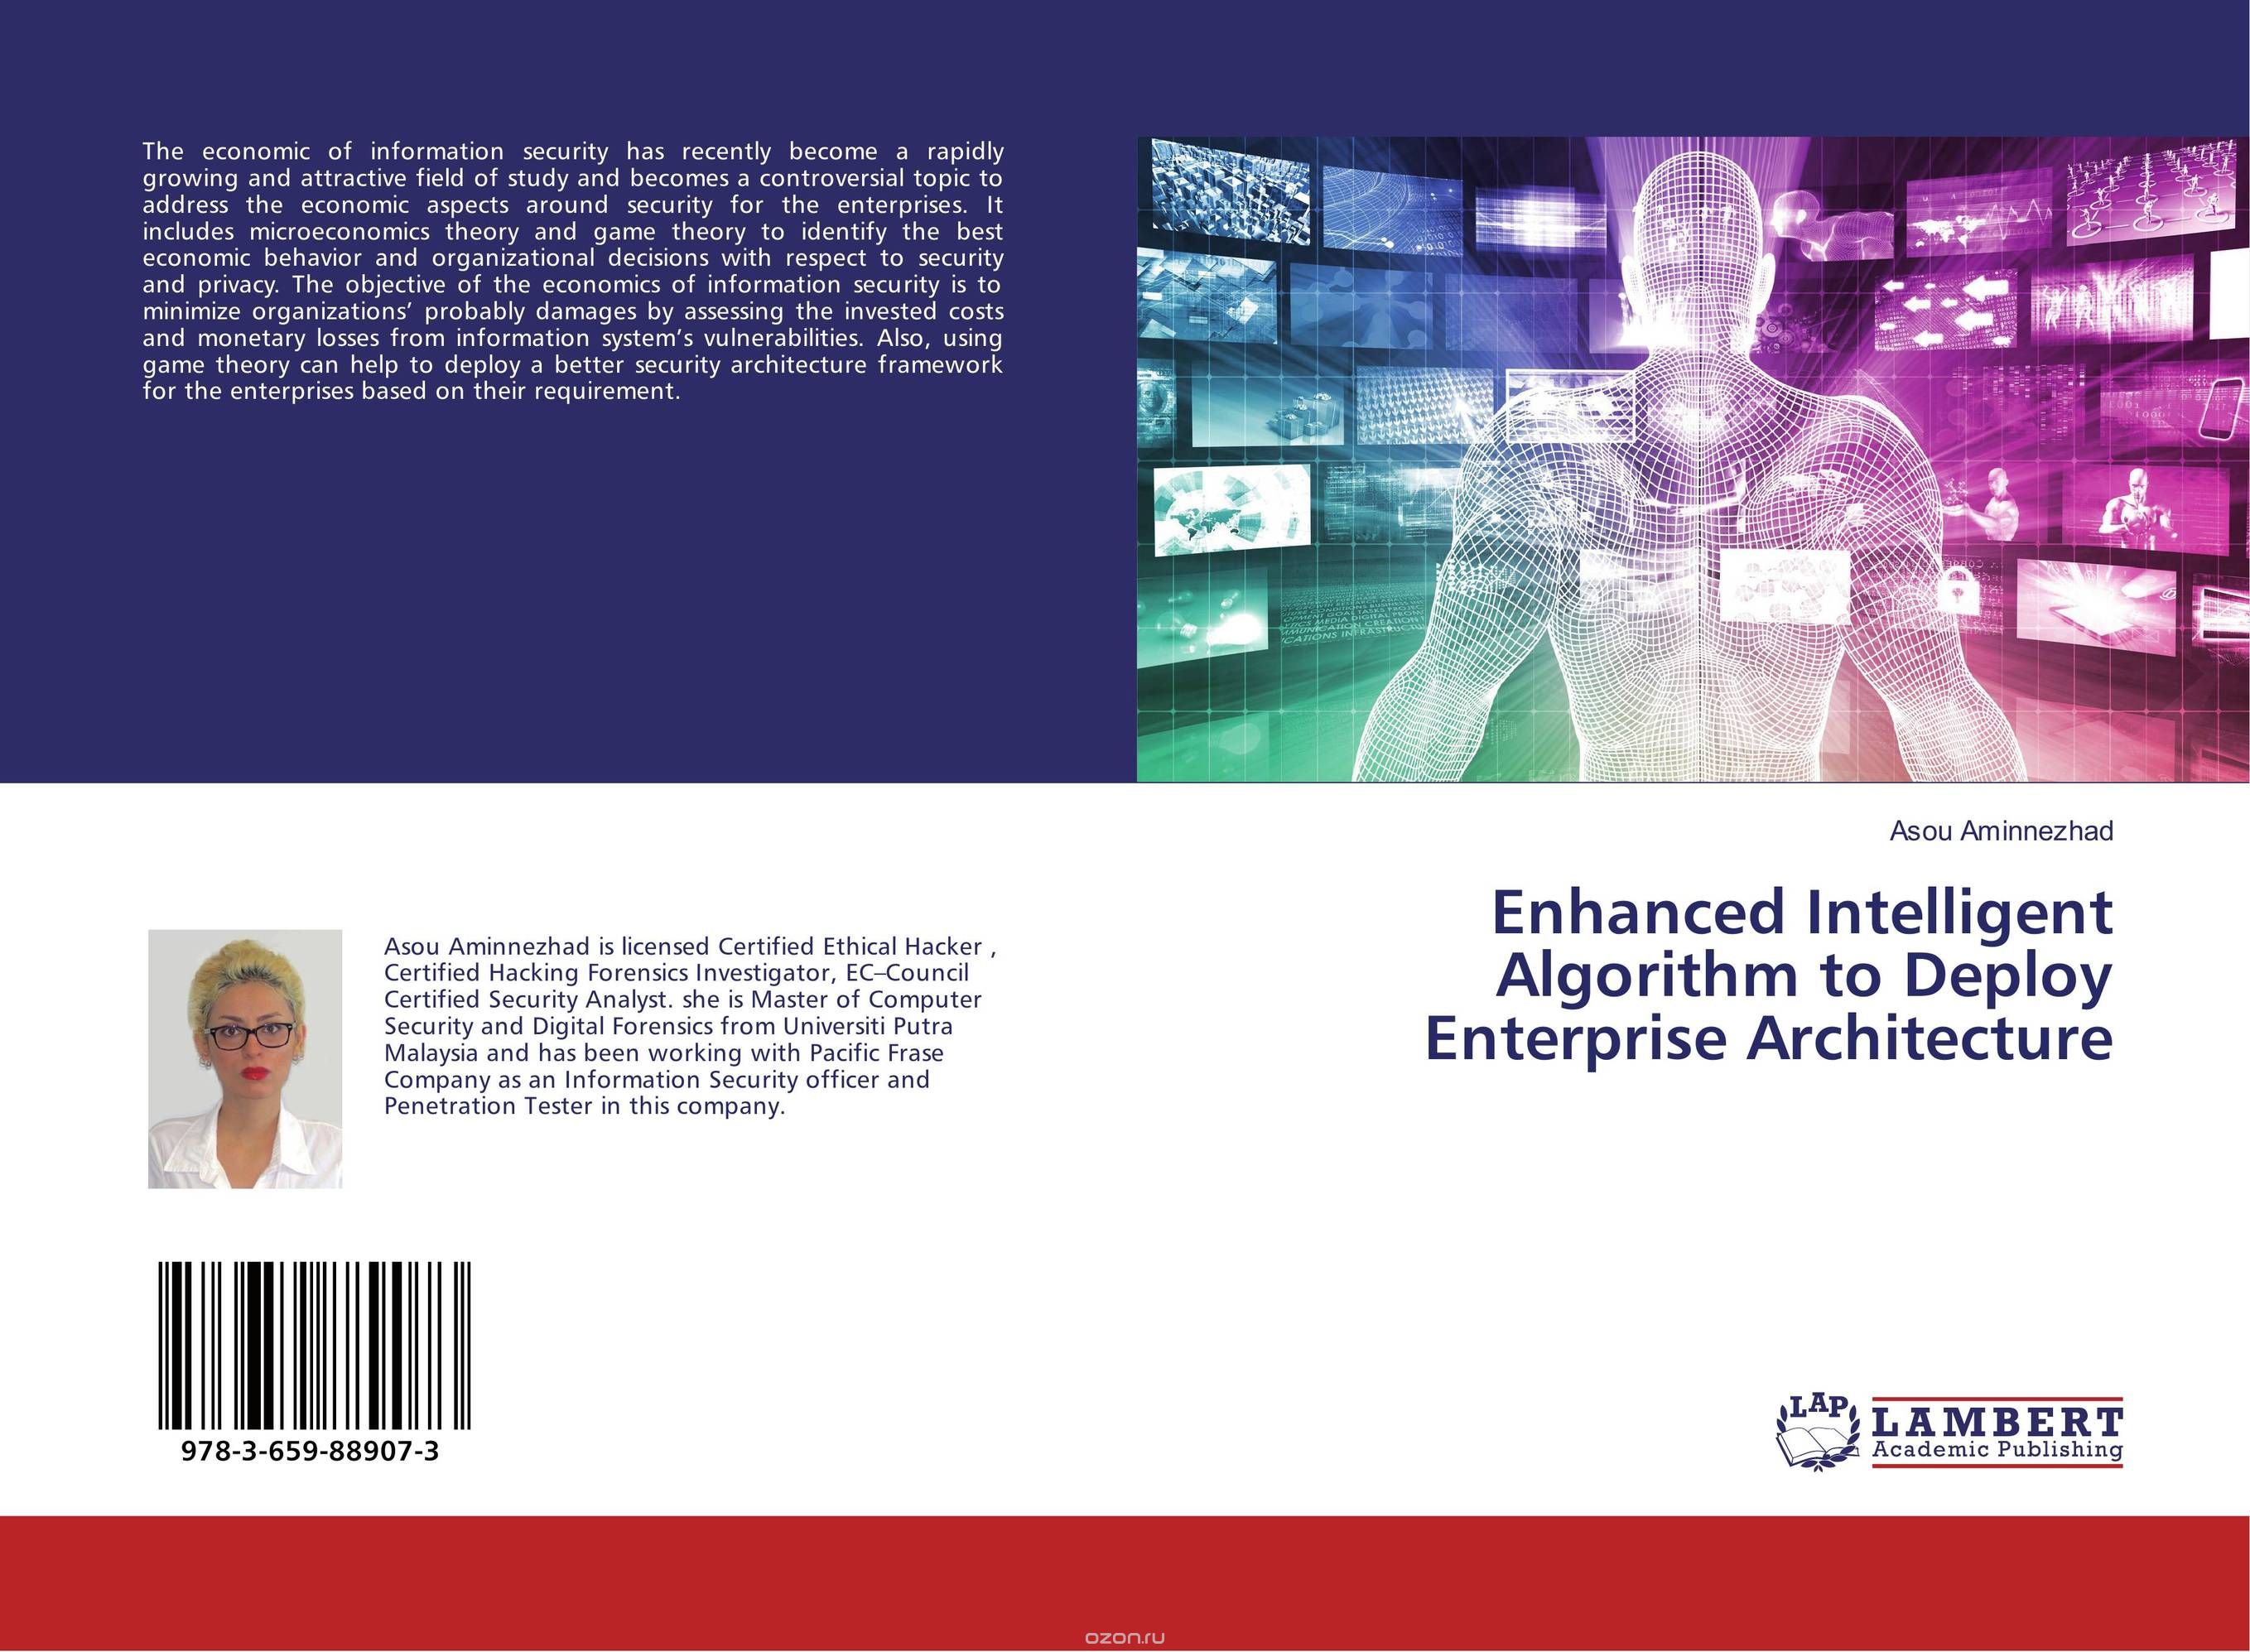 Скачать книгу "Enhanced Intelligent Algorithm to Deploy Enterprise Architecture"